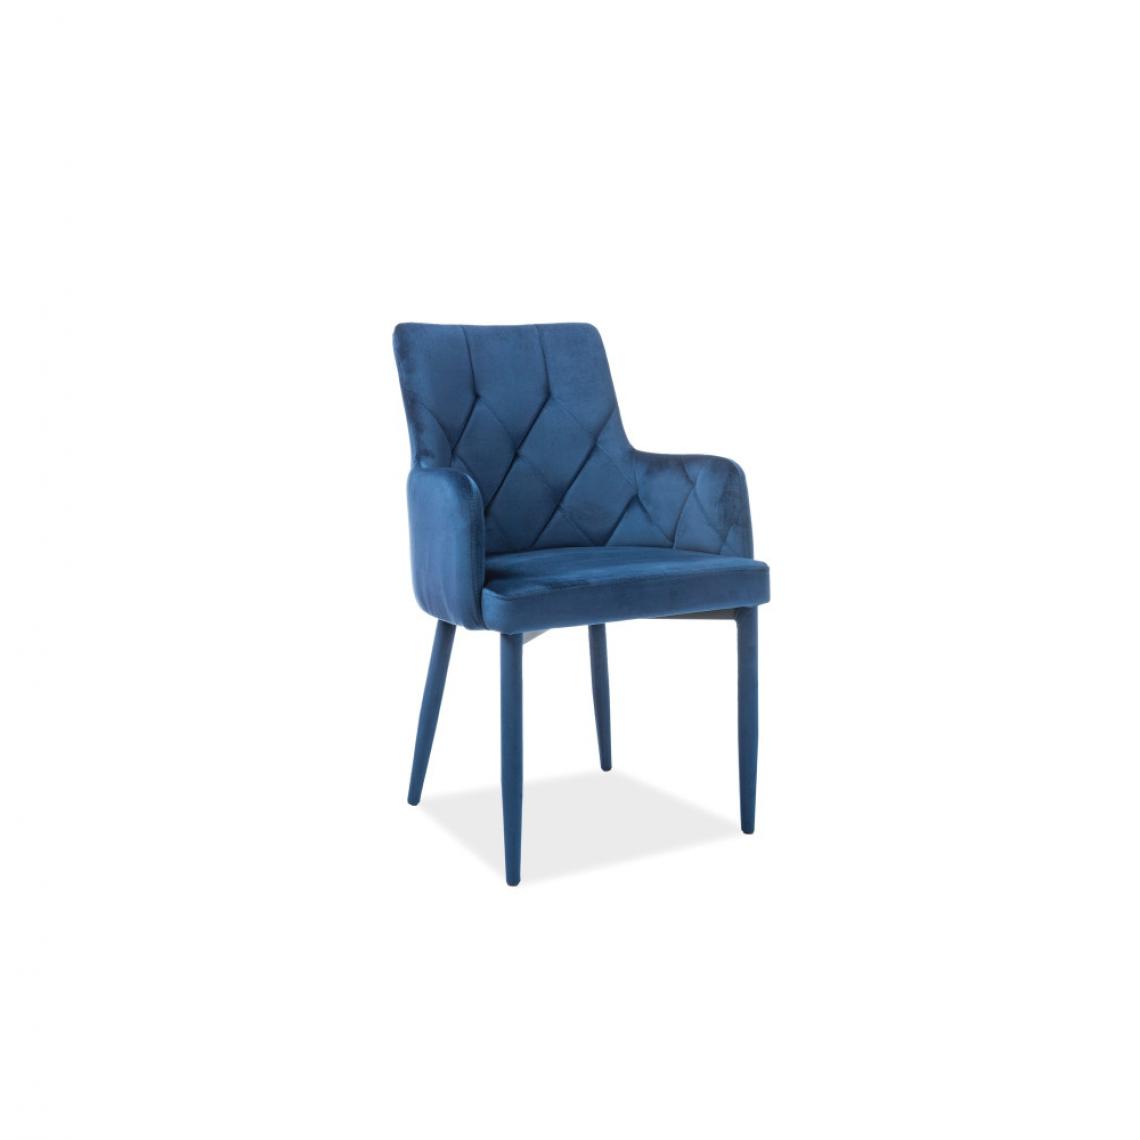 Ac-Deco - Chaise - Ricardo - L 50 cm x l 44 cm x H 88 cm - Bleu marine - Chaises